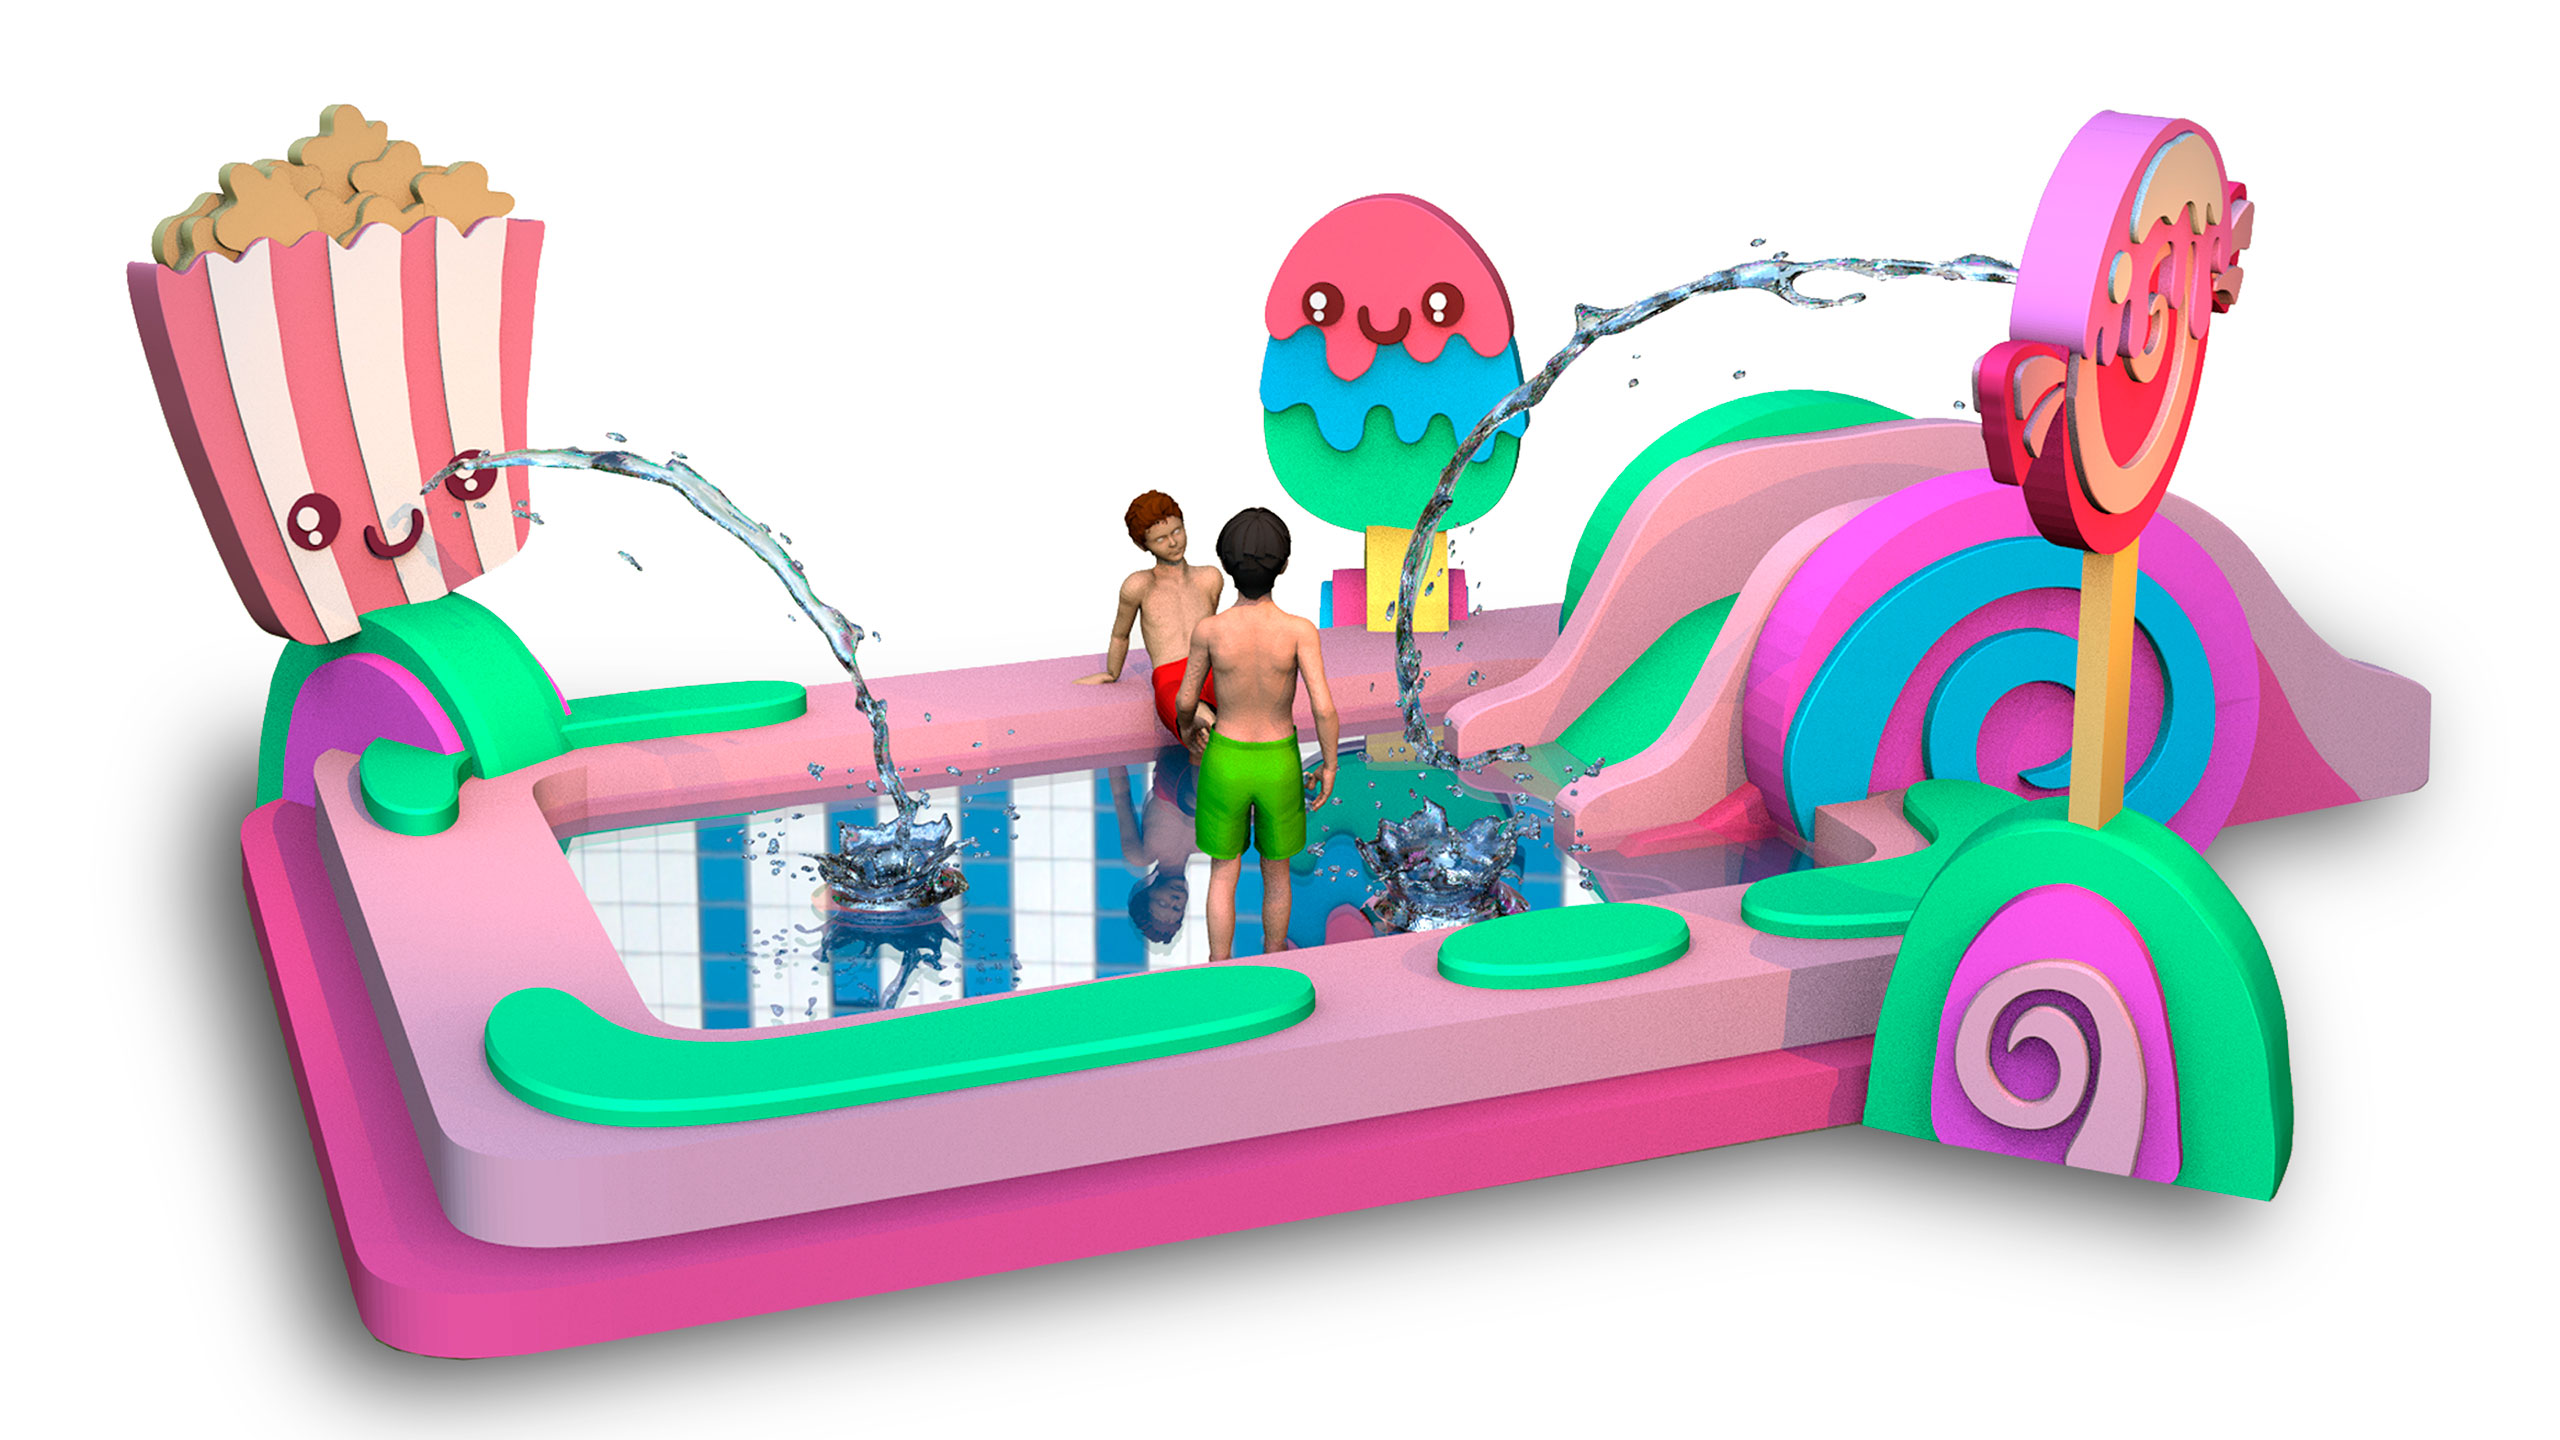 Children’s themed pools